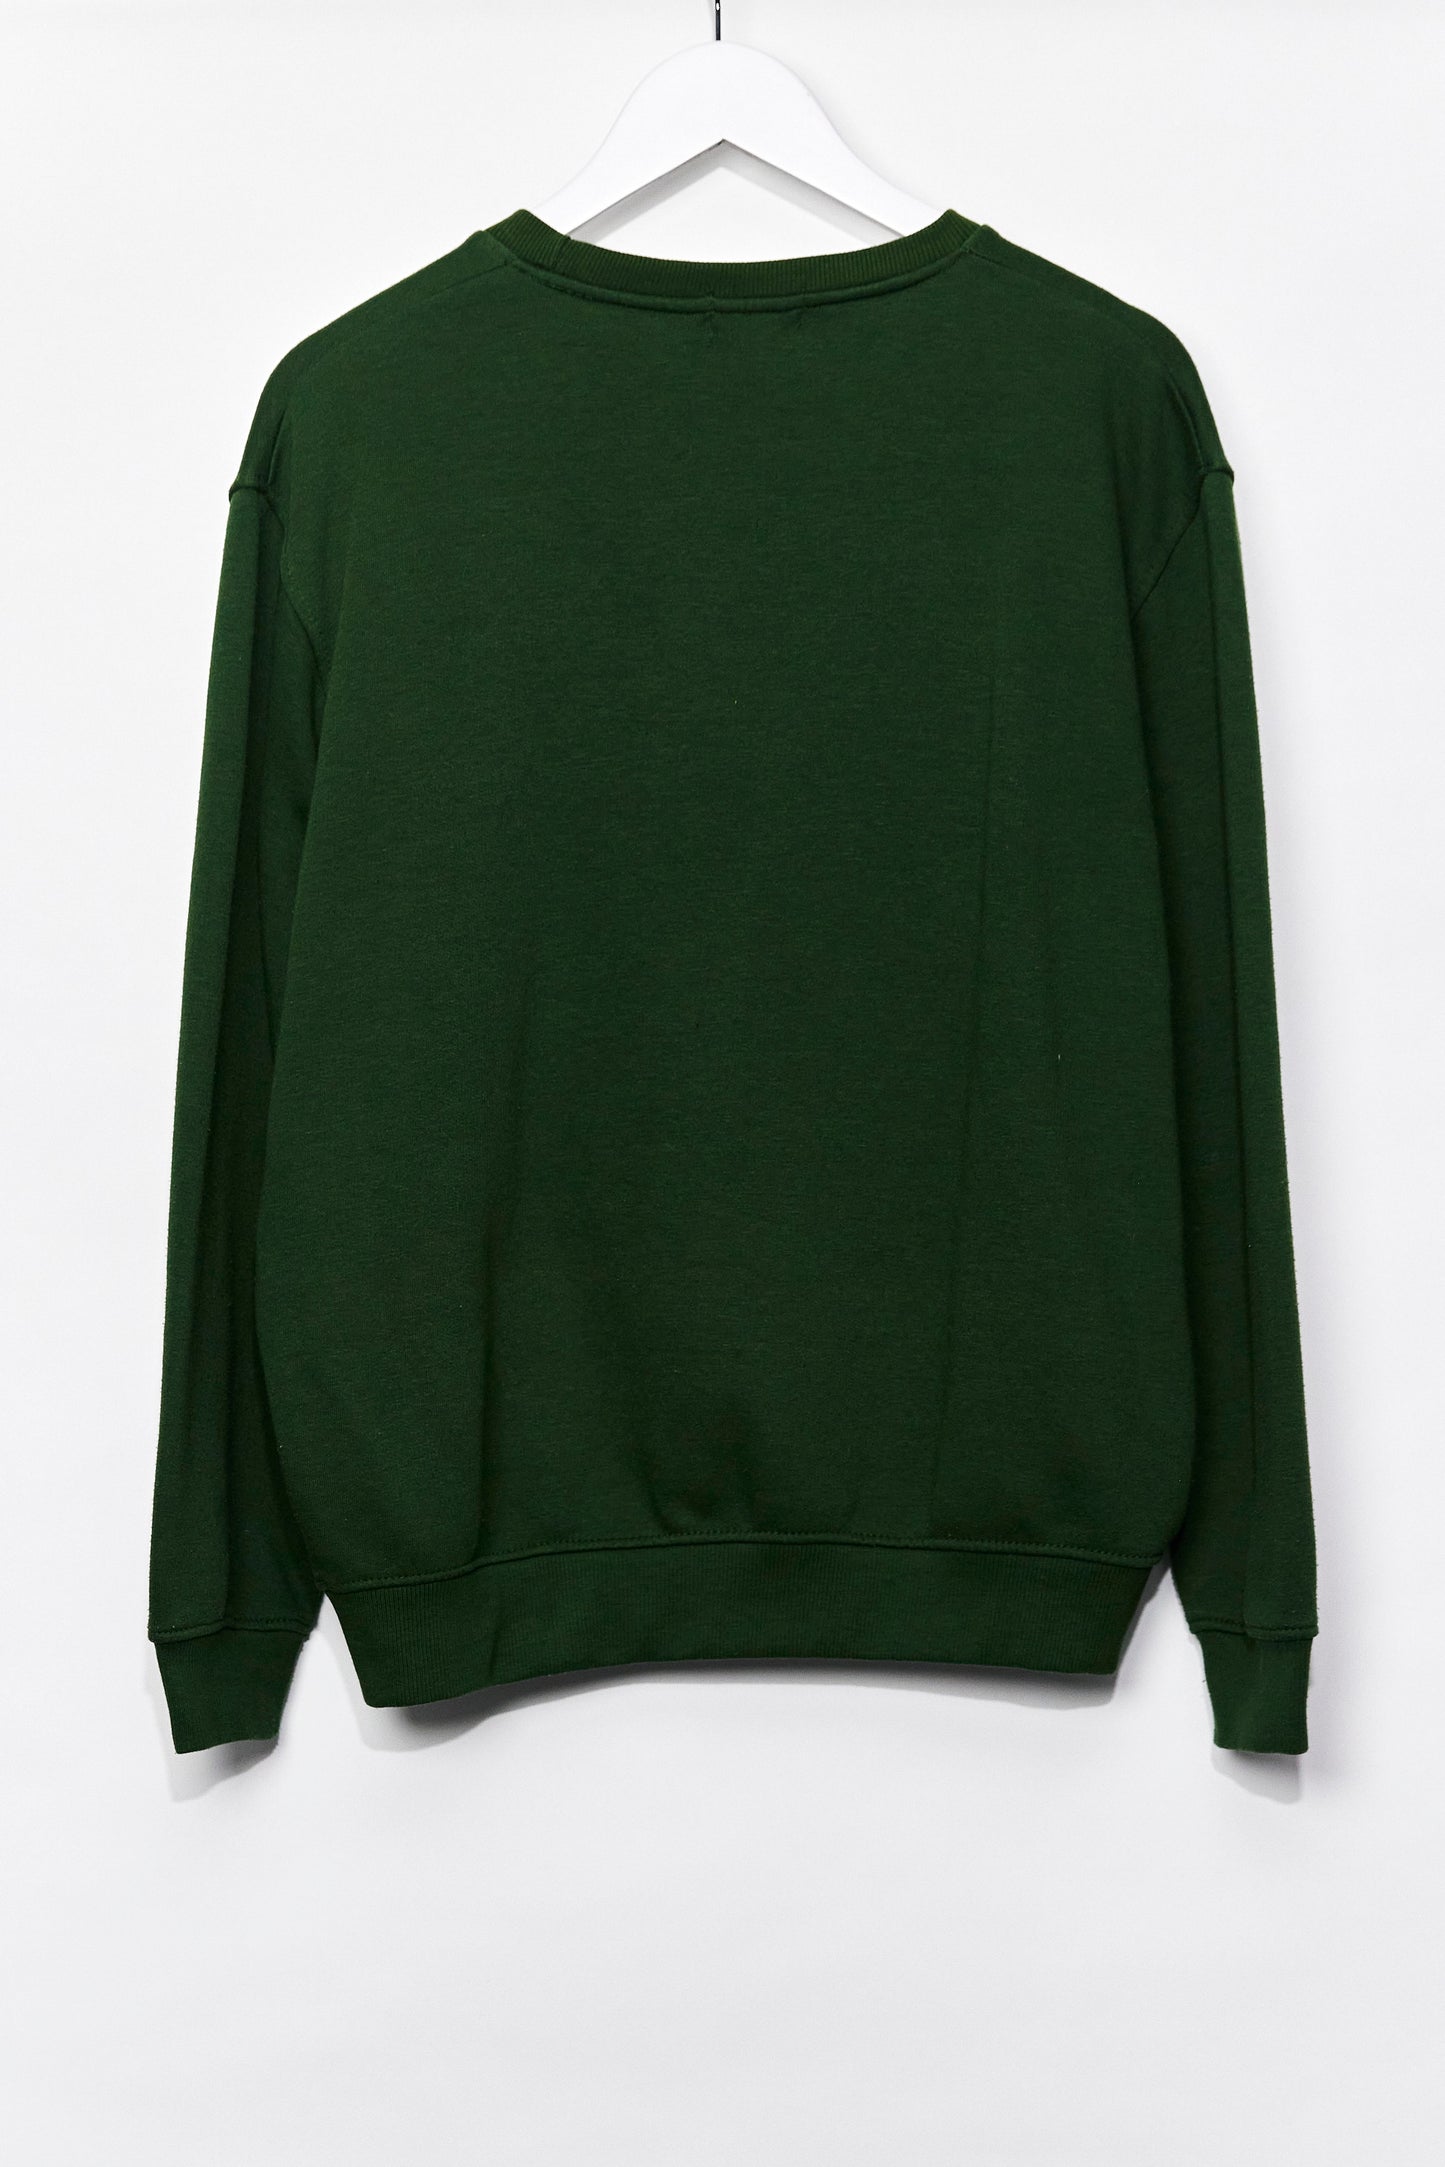 Mens Green Sweatshirt size small